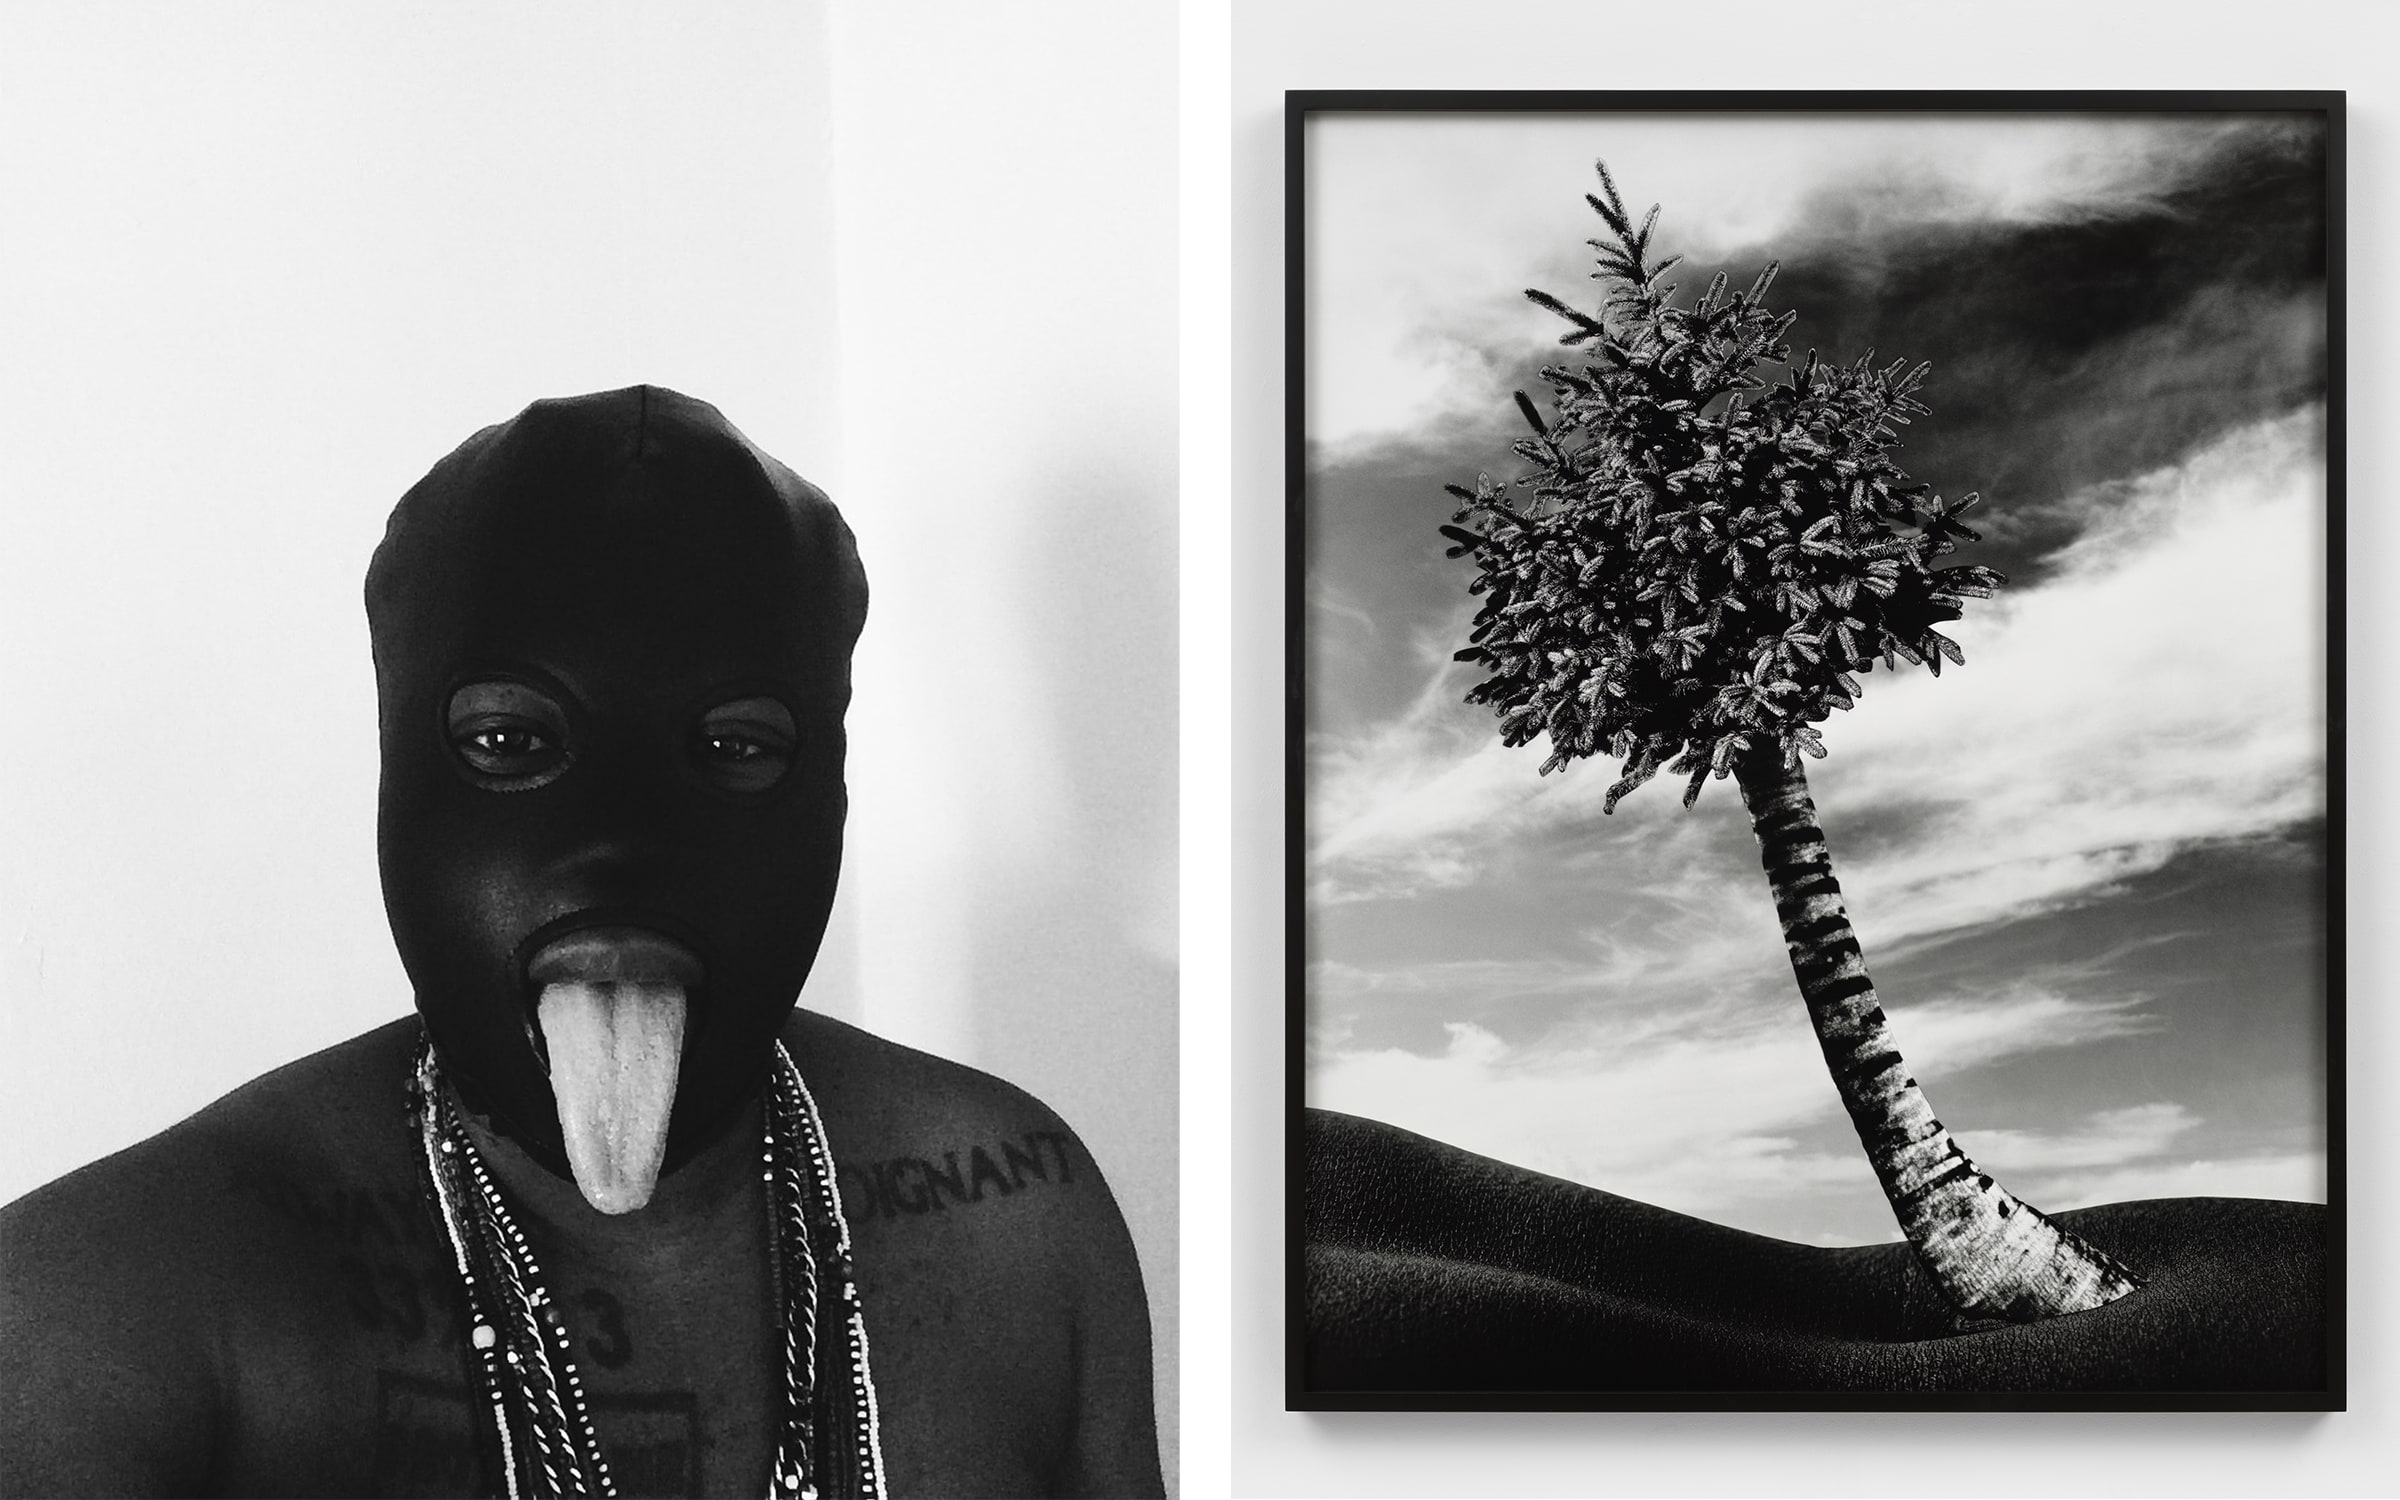 Left: Tiona Nekkia McClodden. Se te subio el Santo, 2016. Courtesy of the artist. Right: Lorraine O’Grady. The Fir Palm, 1991/2012. Alexander Gray Gallery, New York. Photo: Lorraine O’Grady.